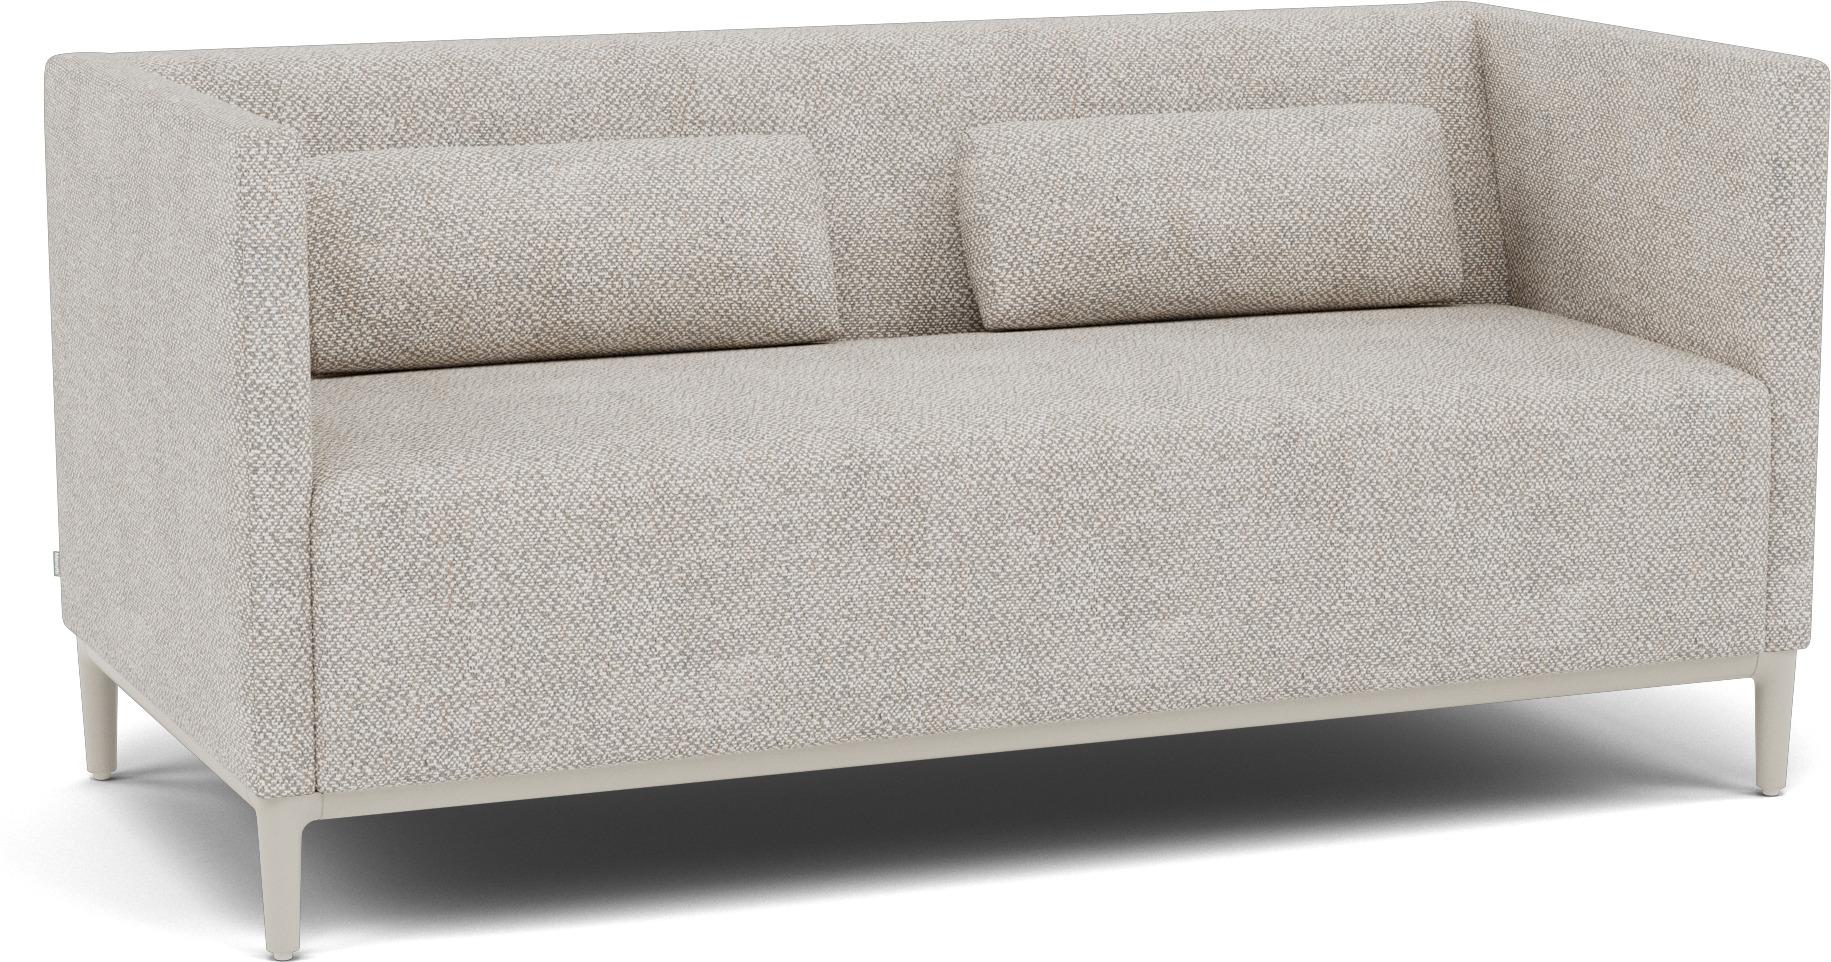 Zendo Sense Club sofa